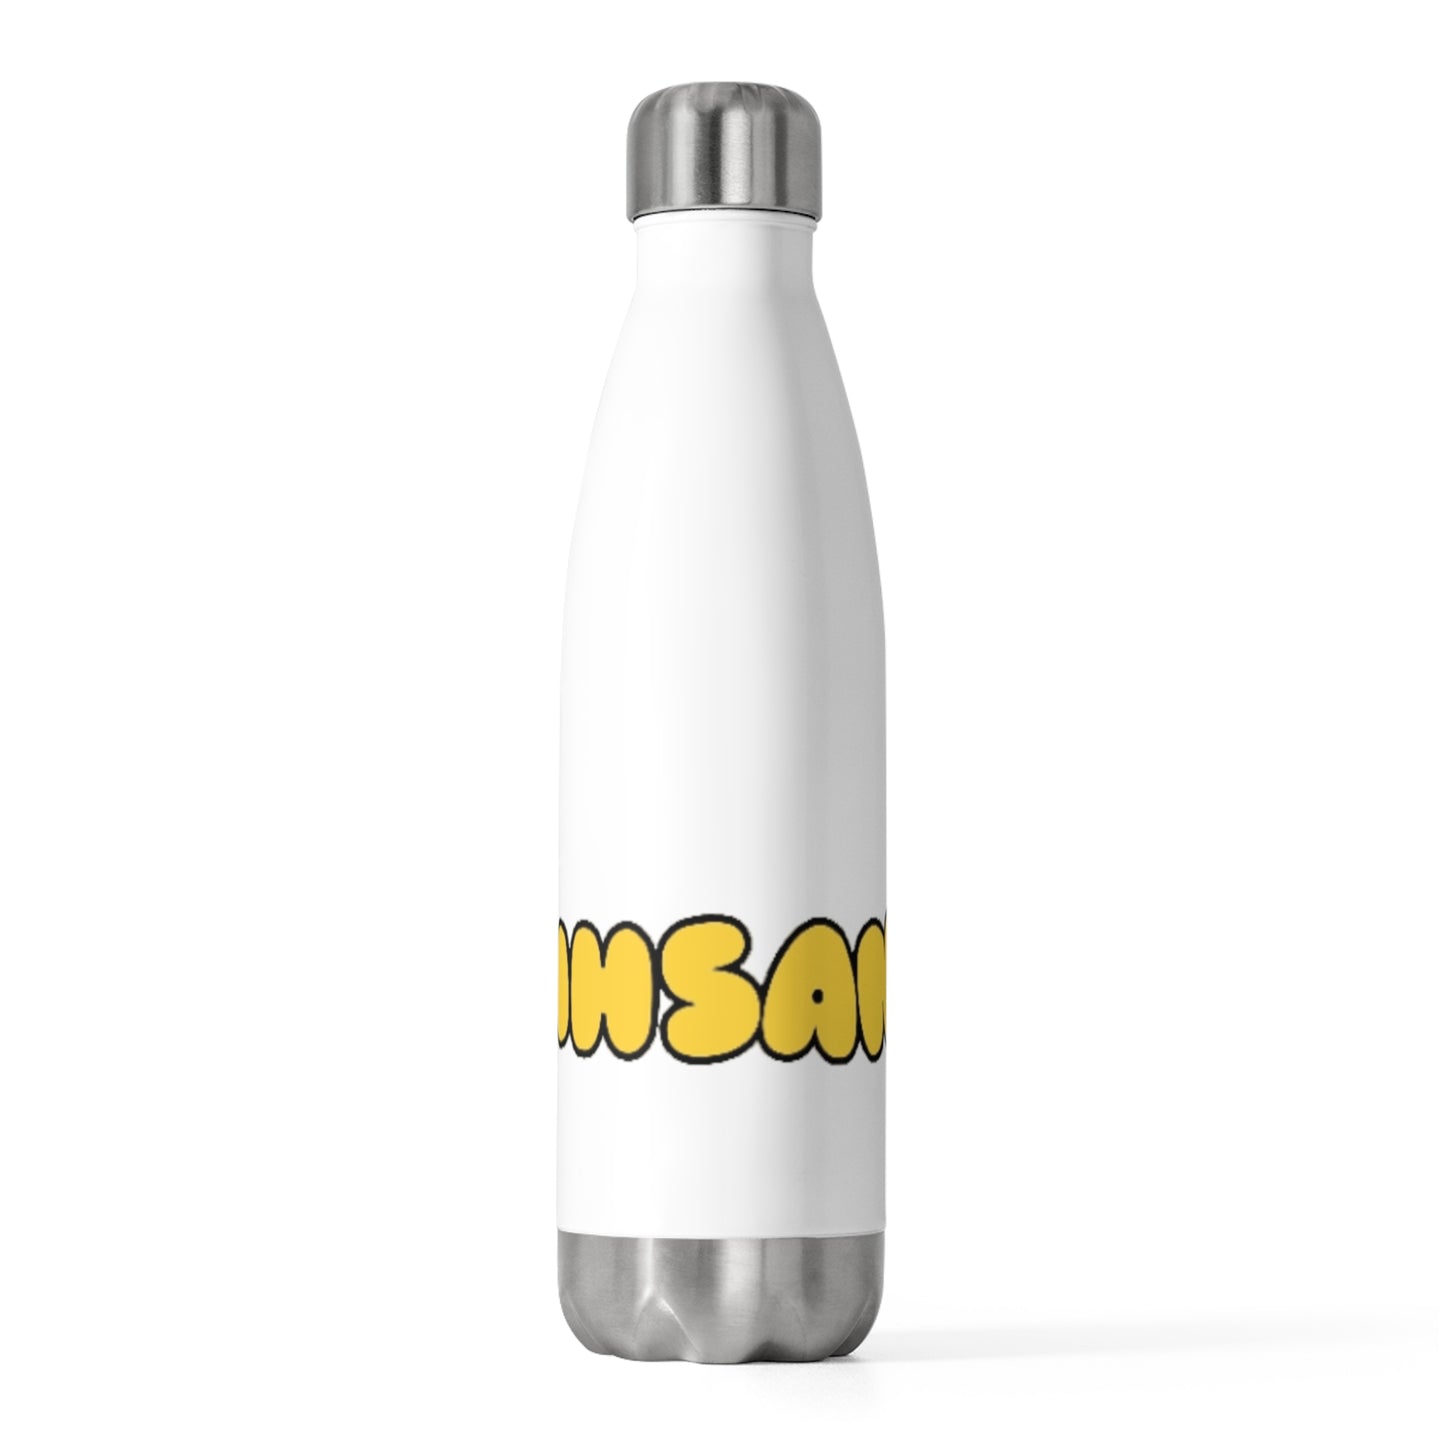 inhsane legacy v2 stainless steel water bottle (20oz)